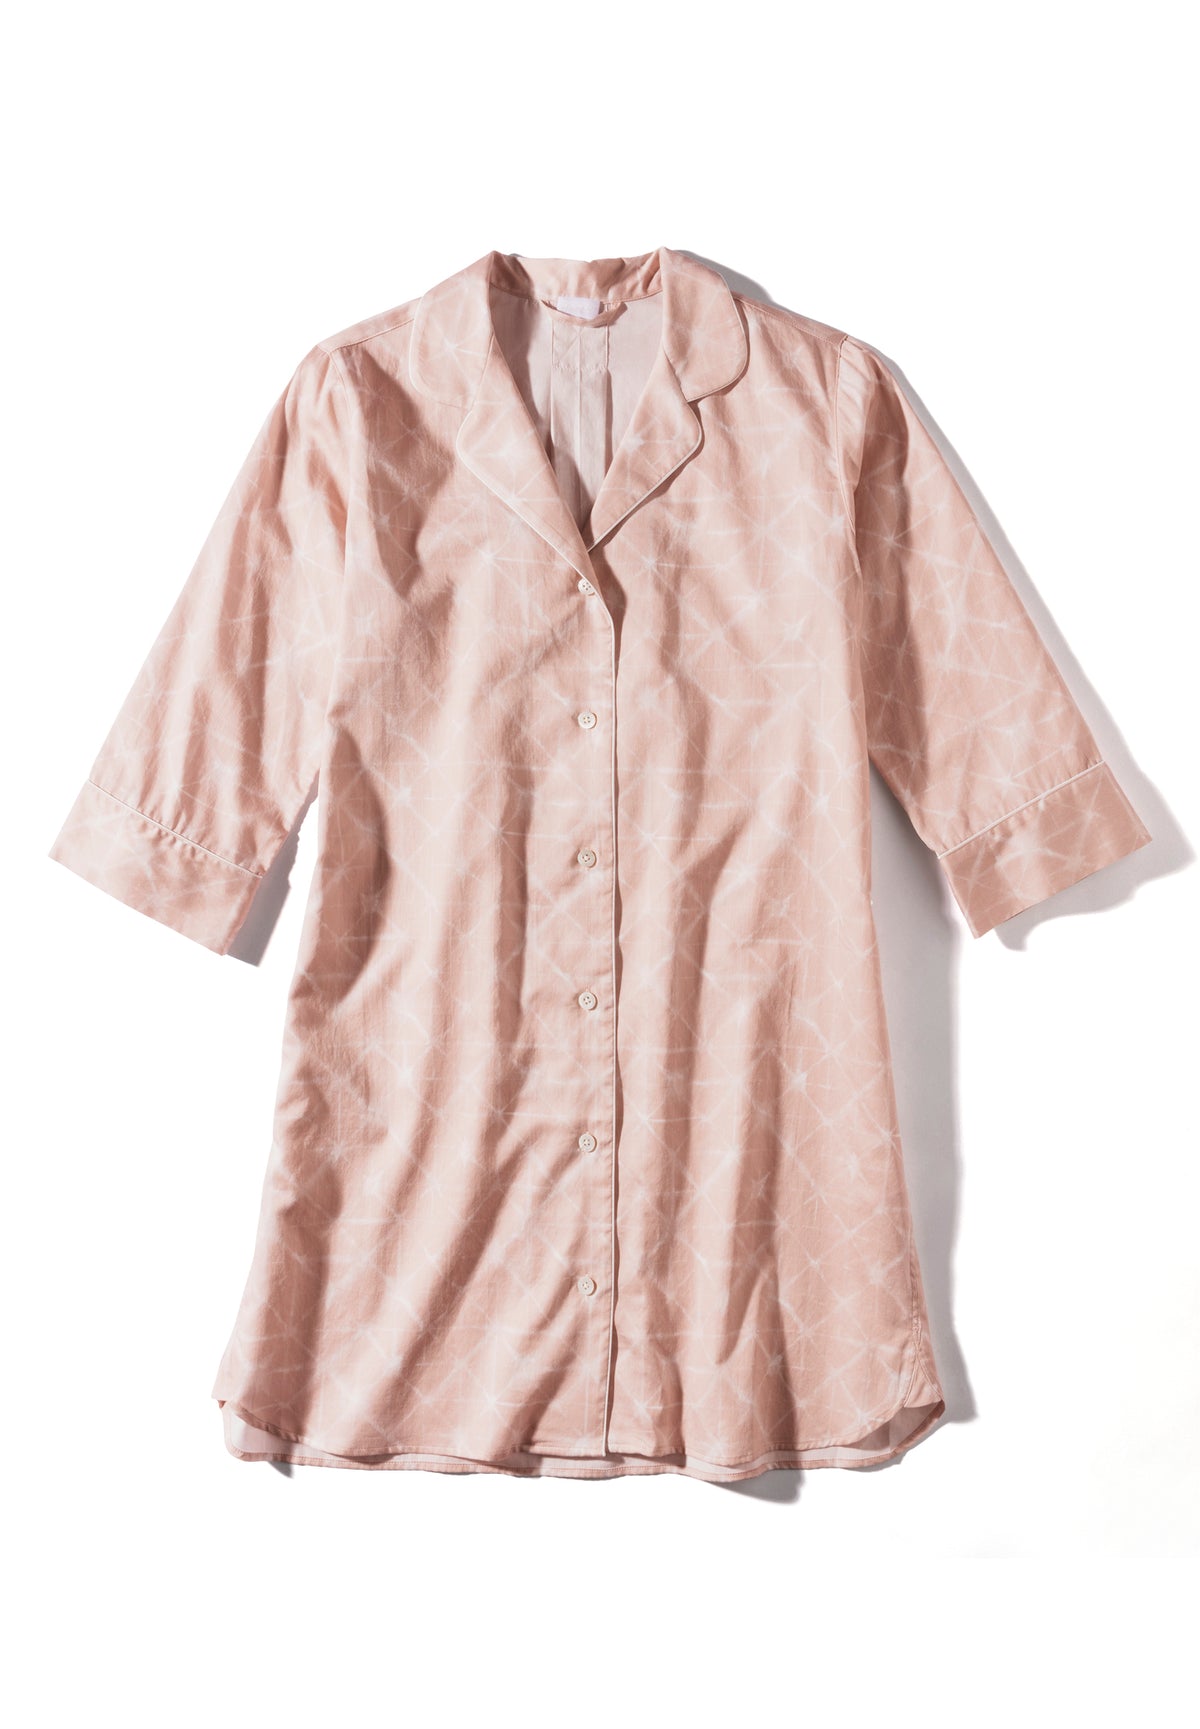 Cotton Sateen Print | Sleepshirt 3/4 Sleeve - geo-batic rose